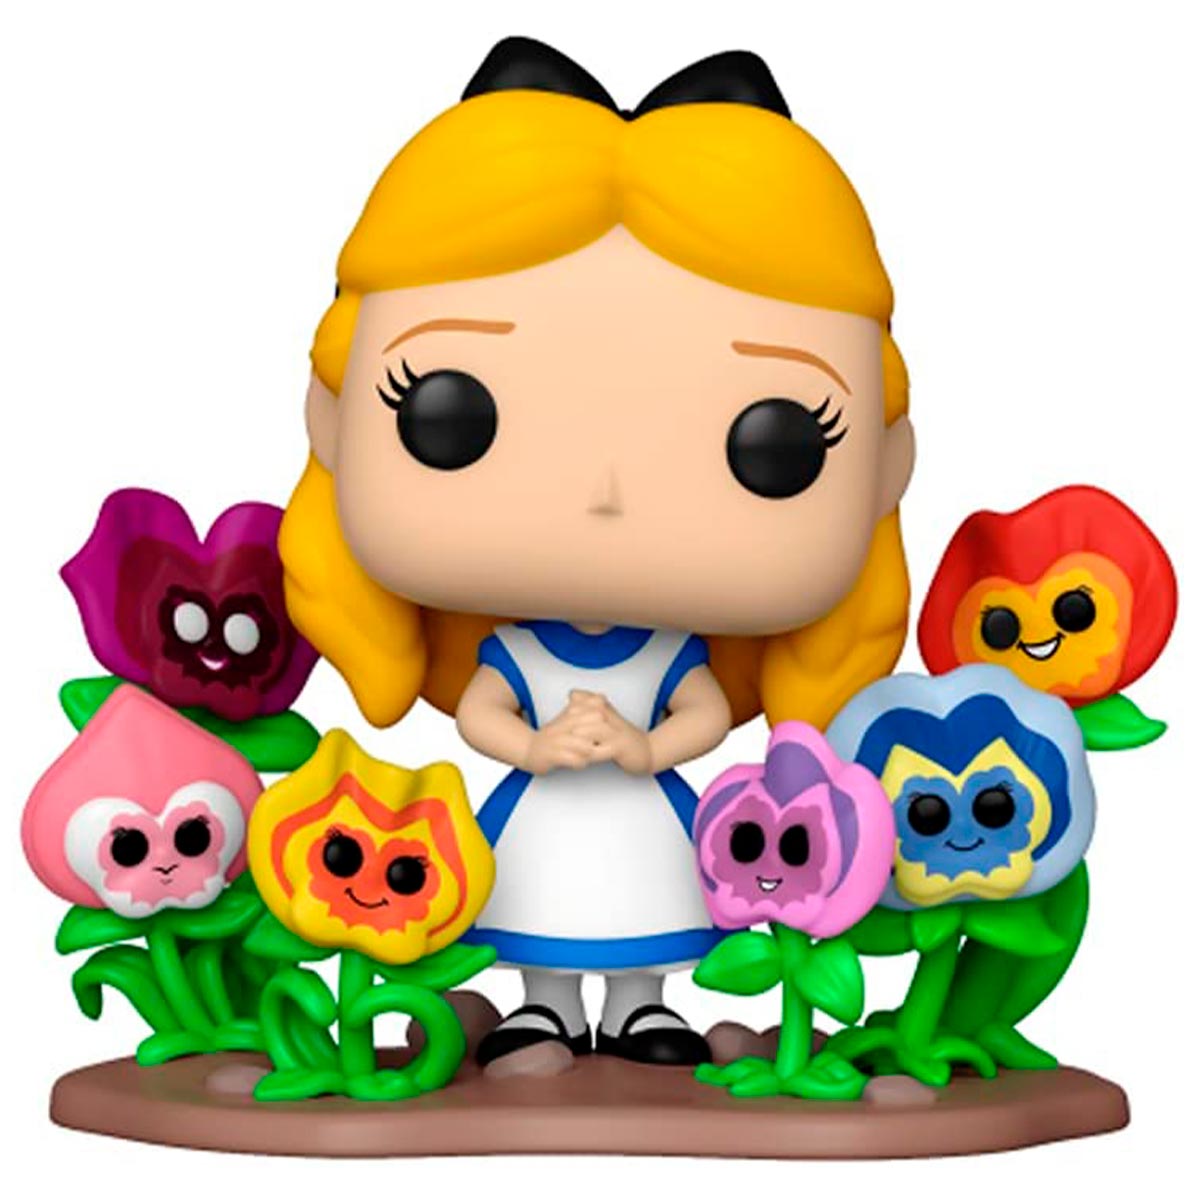 Funko Pop Disney Alice in Wonderland Alice with Flowers 1057 Alice no País das Maravilhas